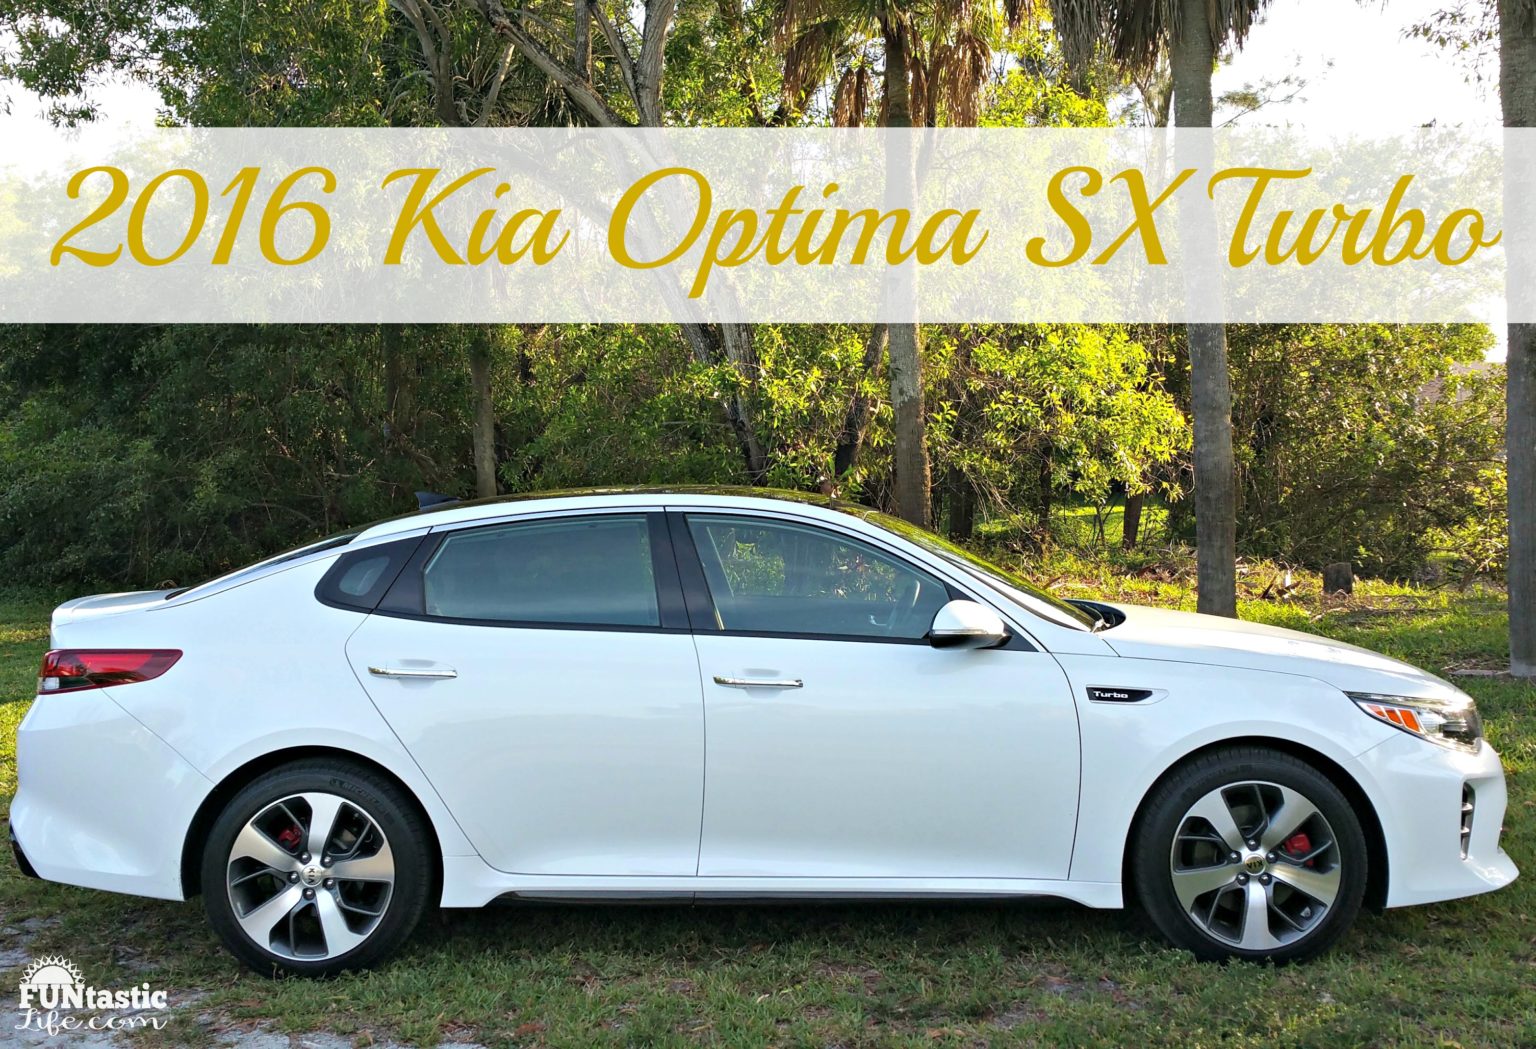 The 2016 Kia Optima Sx Turbo Is Stylish Funtastic Life